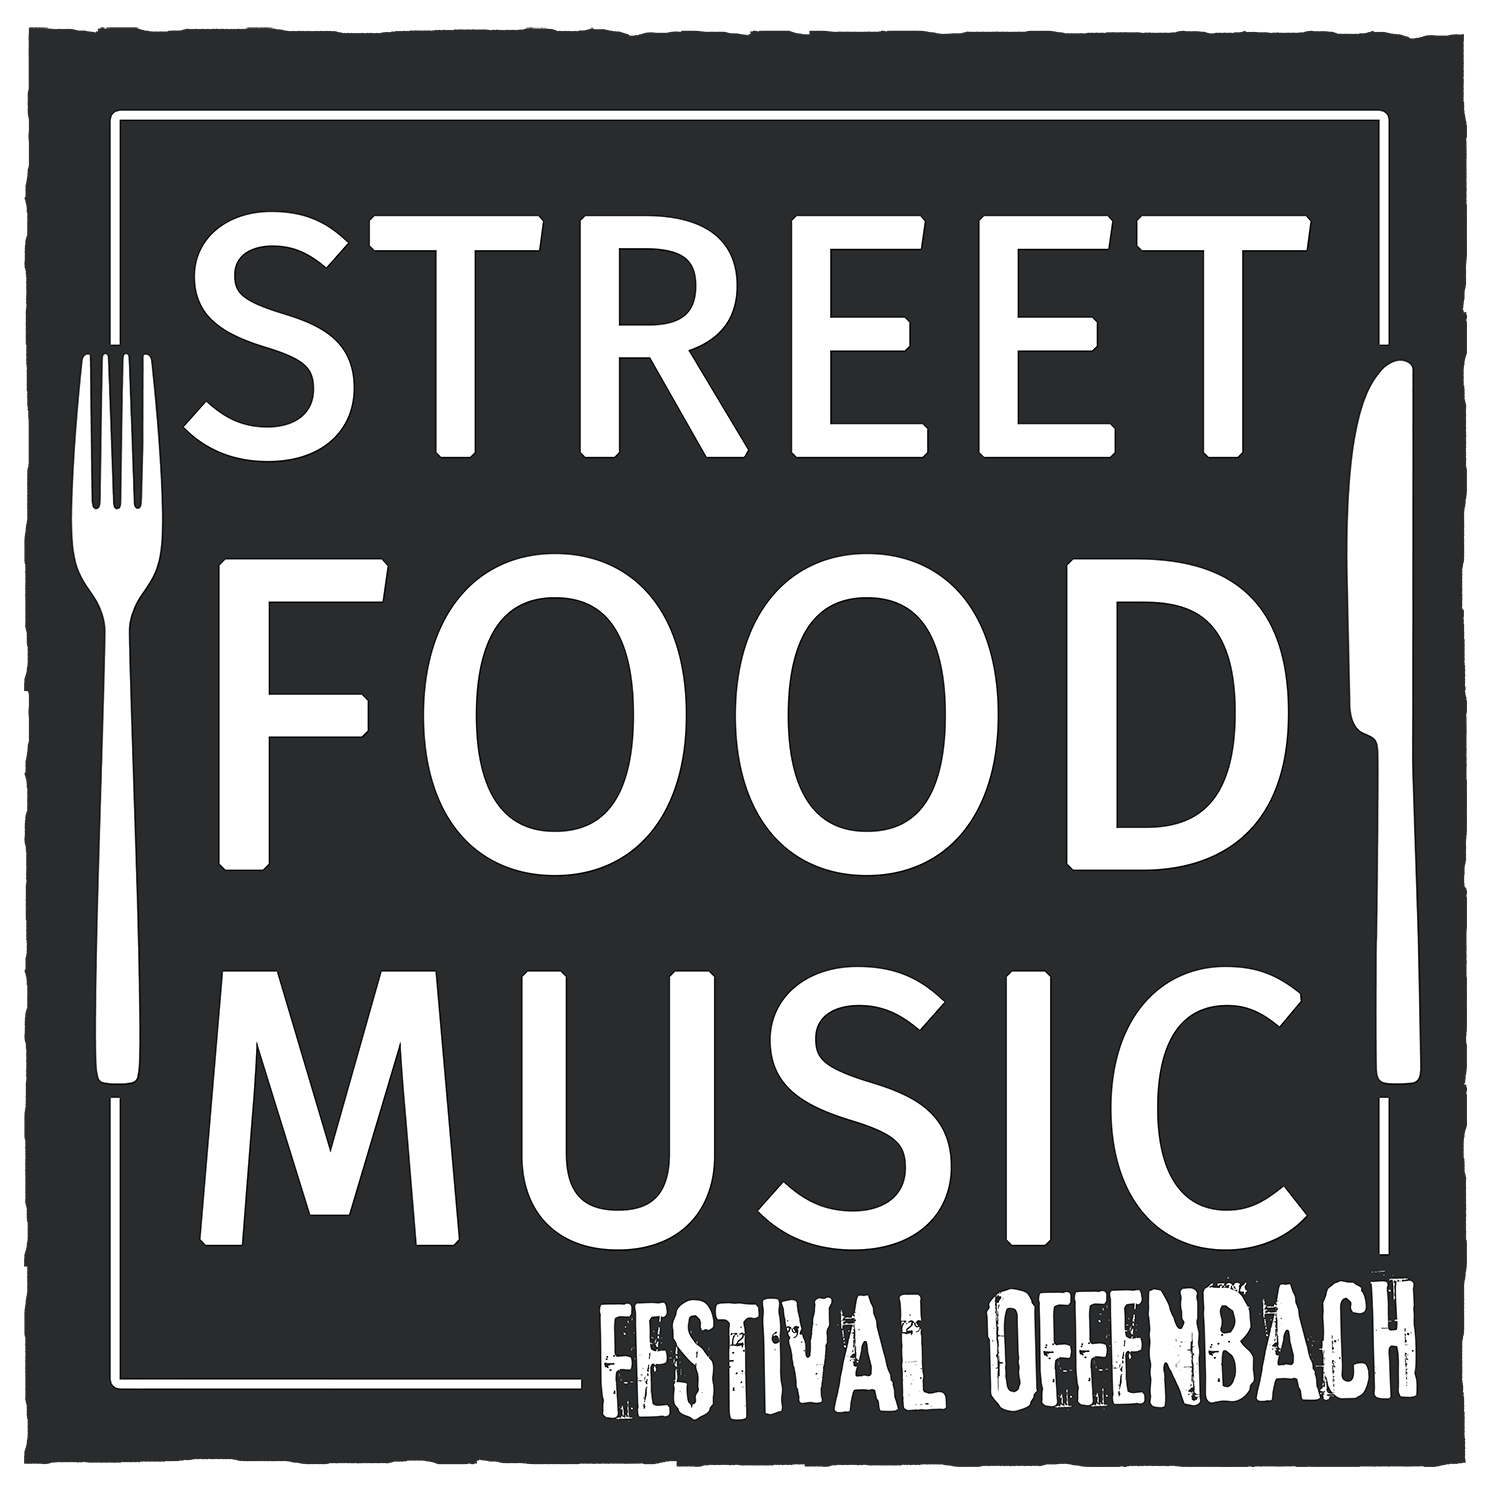 Street Food & Music Festival Offenbach